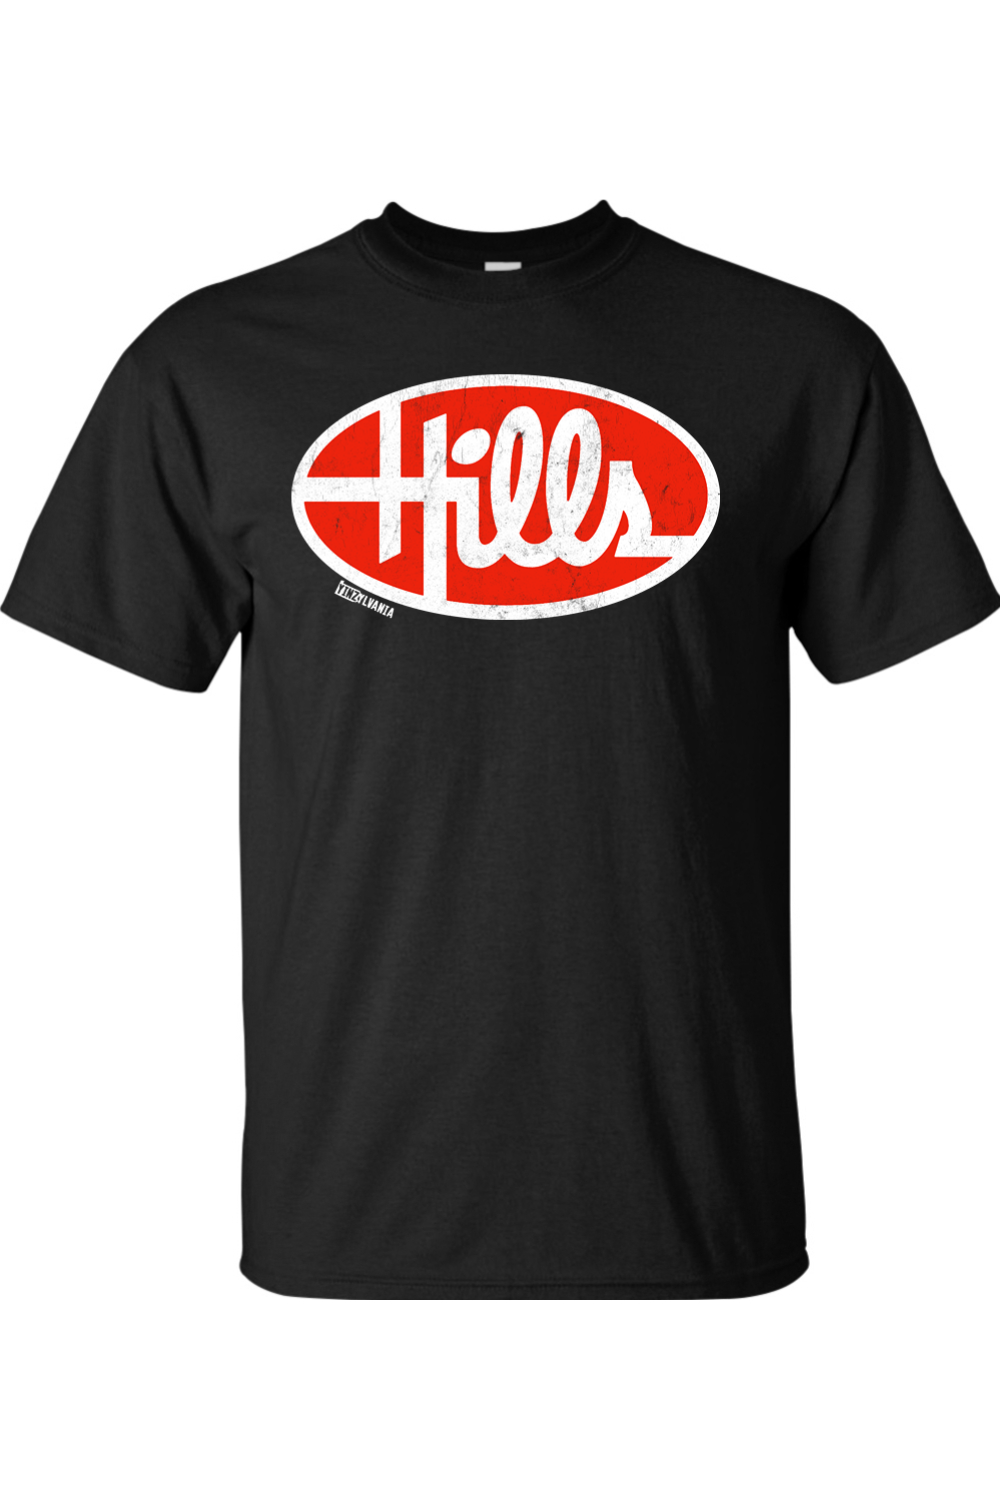 Hills Retro Logo - Big & Tall Tee - Yinzylvania